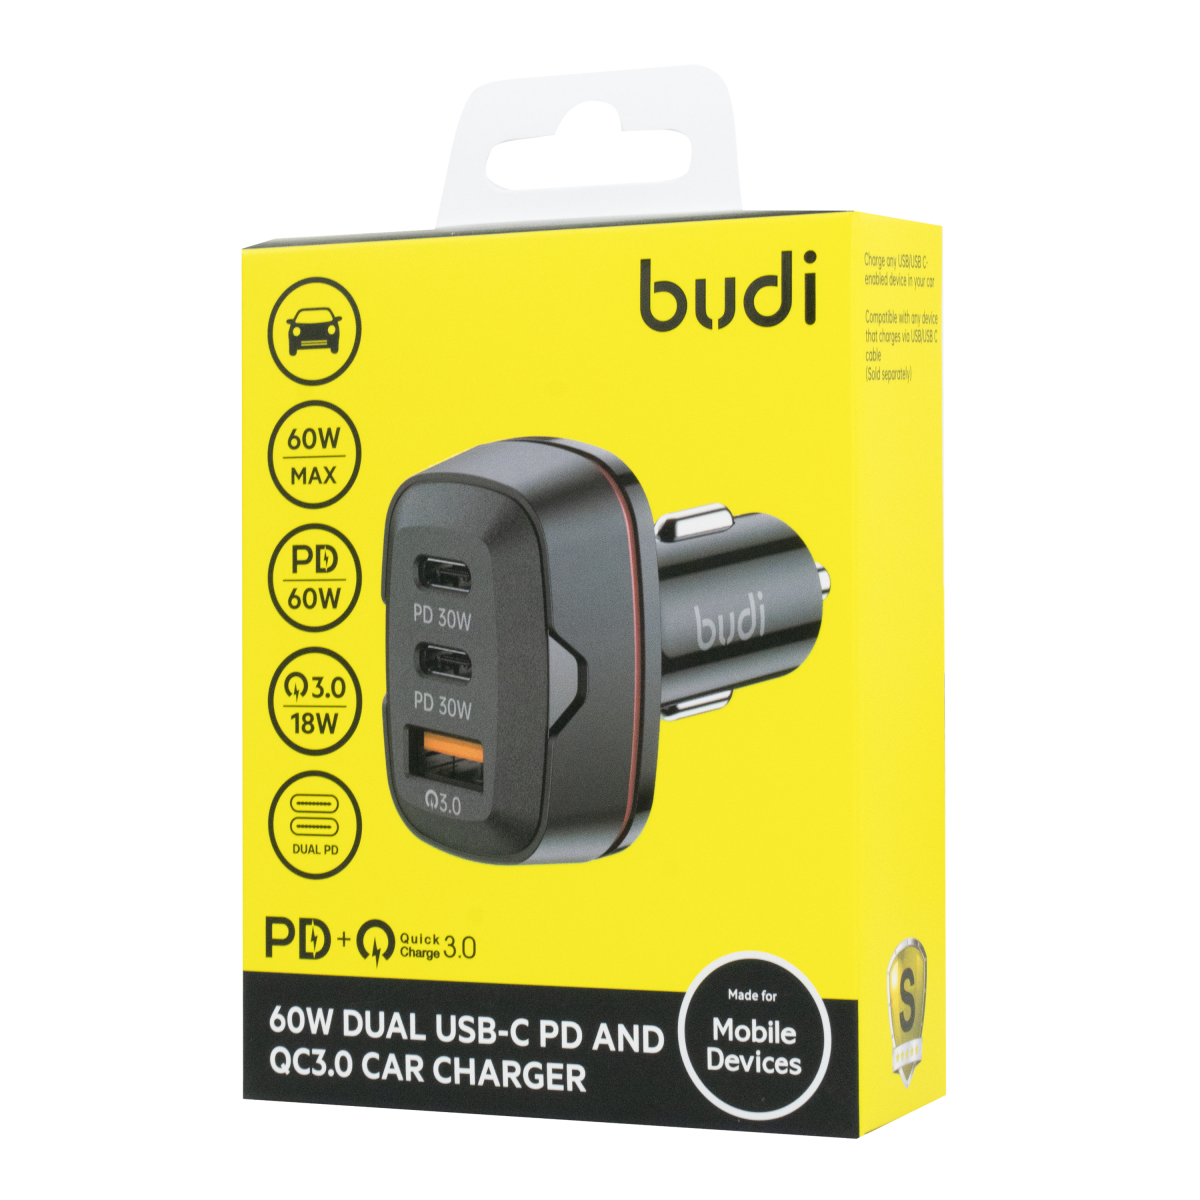 CC616RB - Budi Car Charger 60W Dual USB-C PD and QC3.0